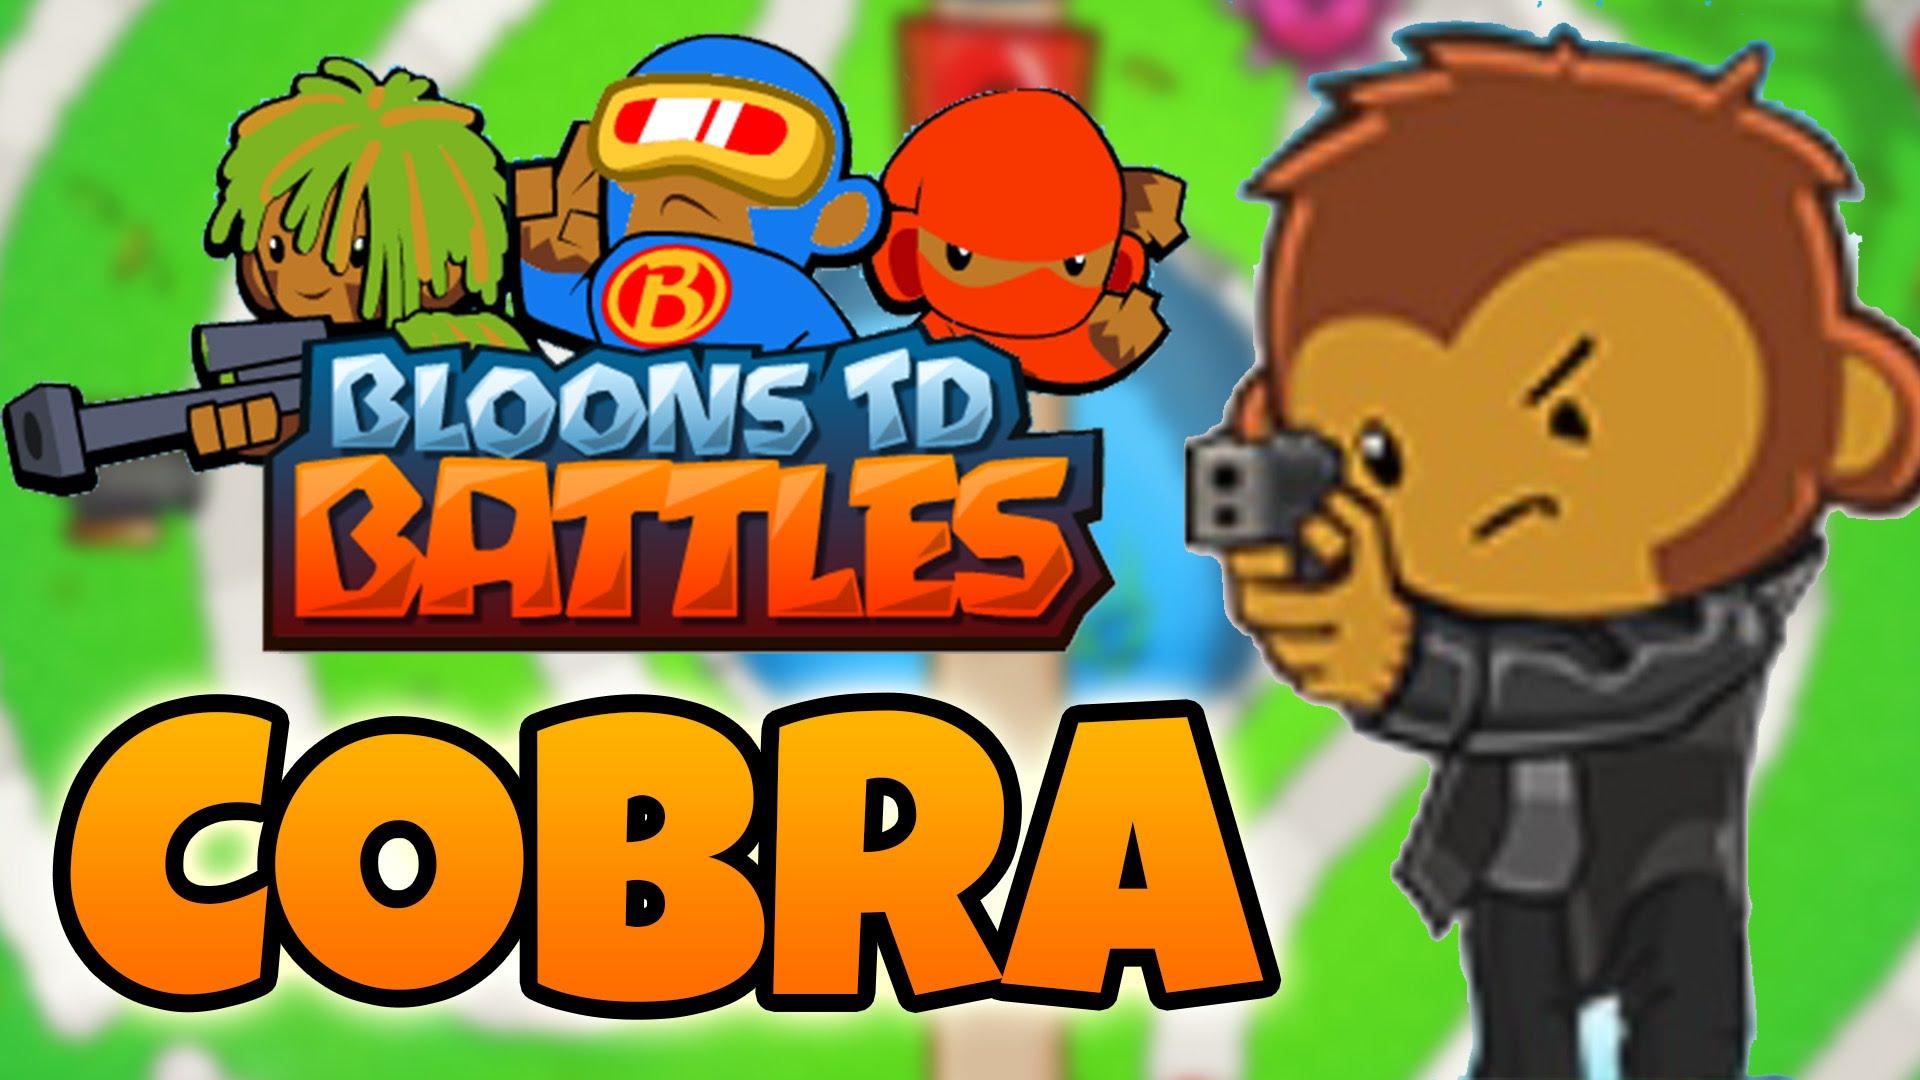 Bloons td battles cobra